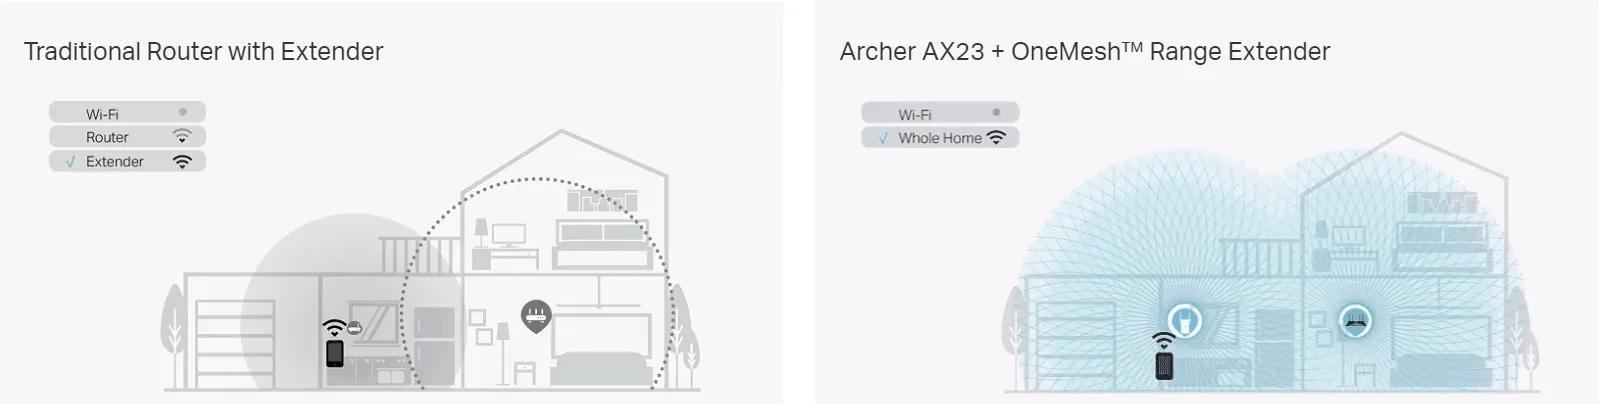 Archer AX23